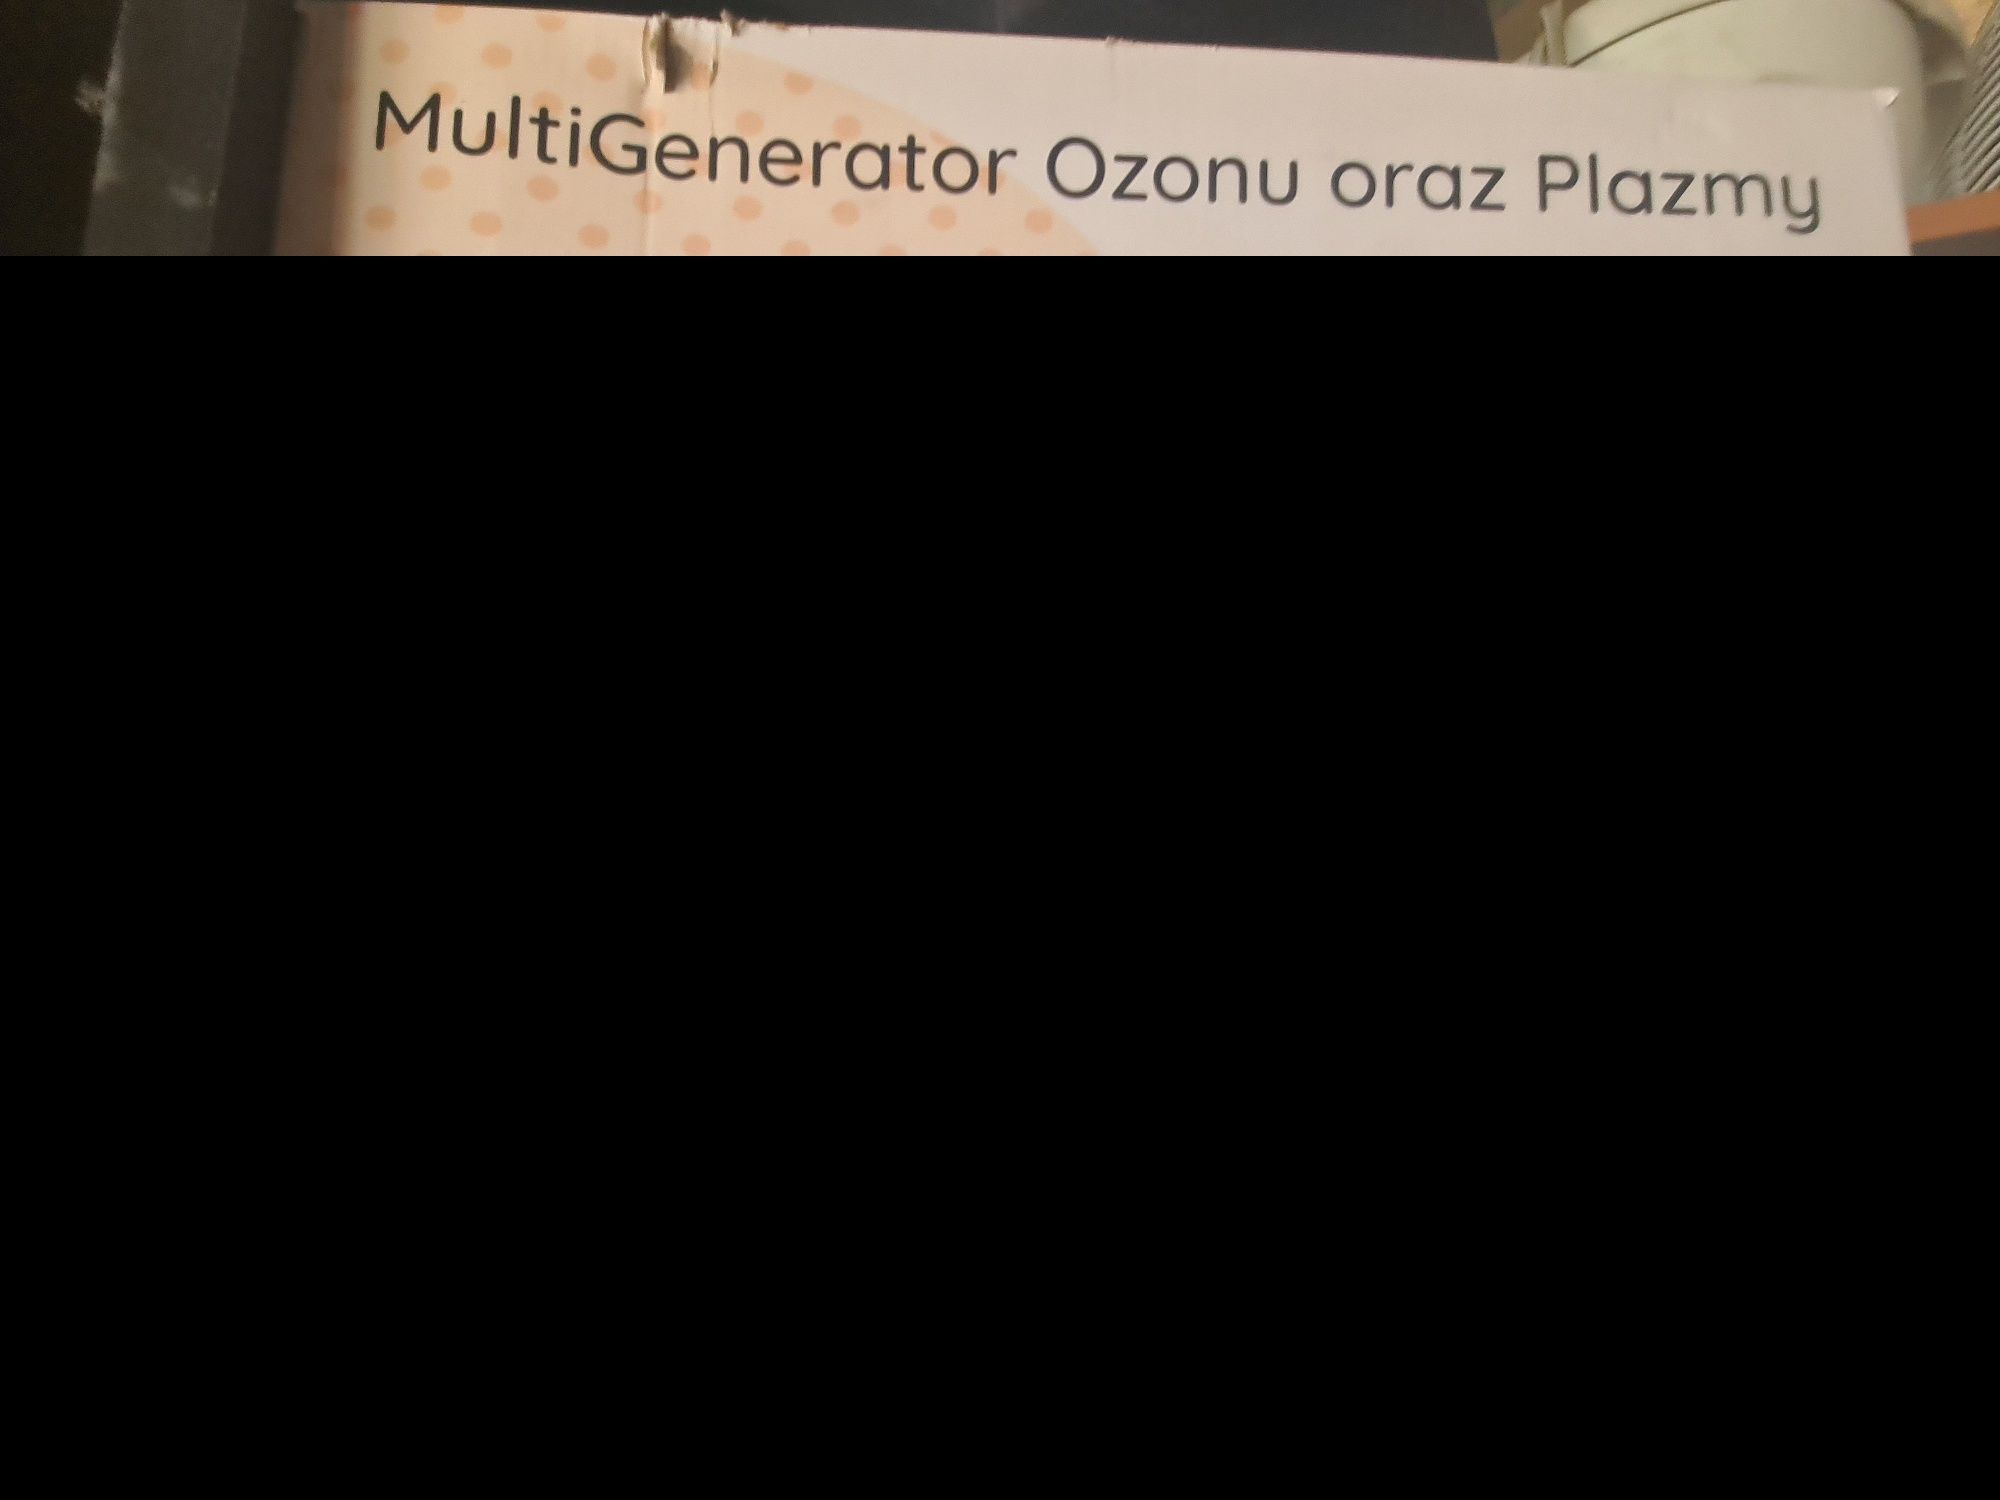 Multigenerator ozonu i plazmy